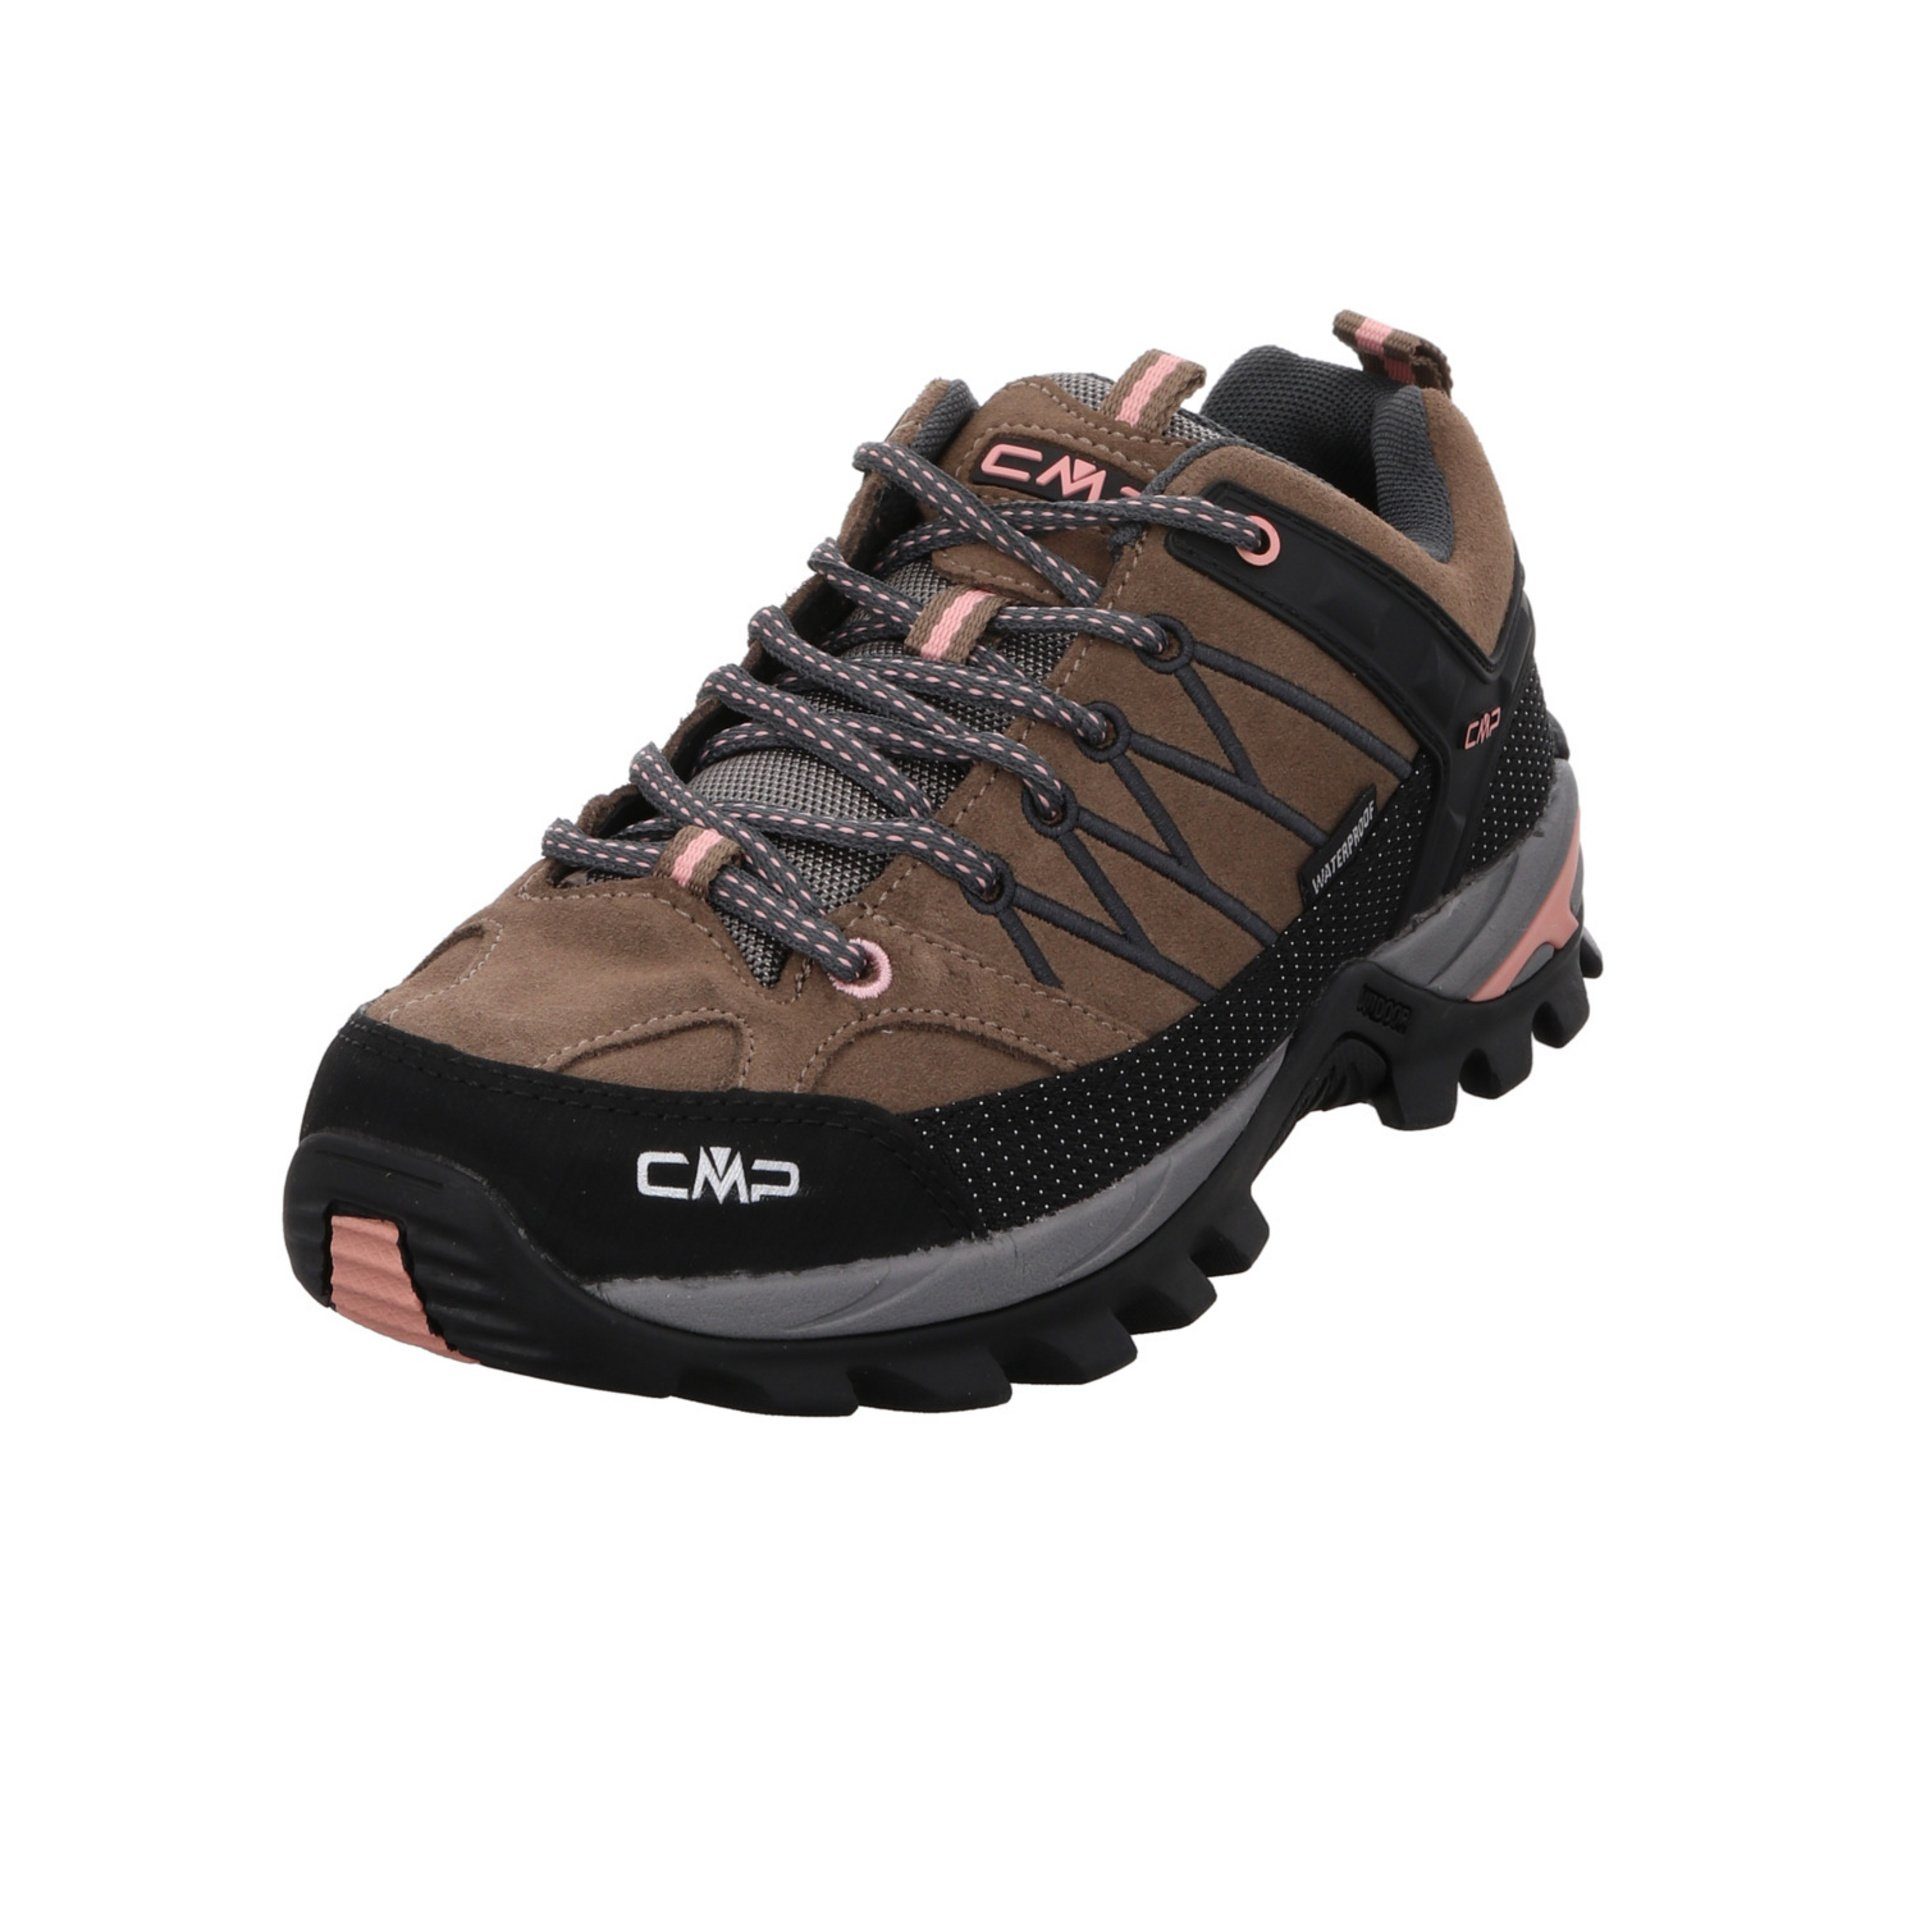 Rigel Outdoorschuh CMP Schuhe CAMPAGNOLO Outdoor Outdoorschuh Low Leder-/Textilkombination Damen CENERE